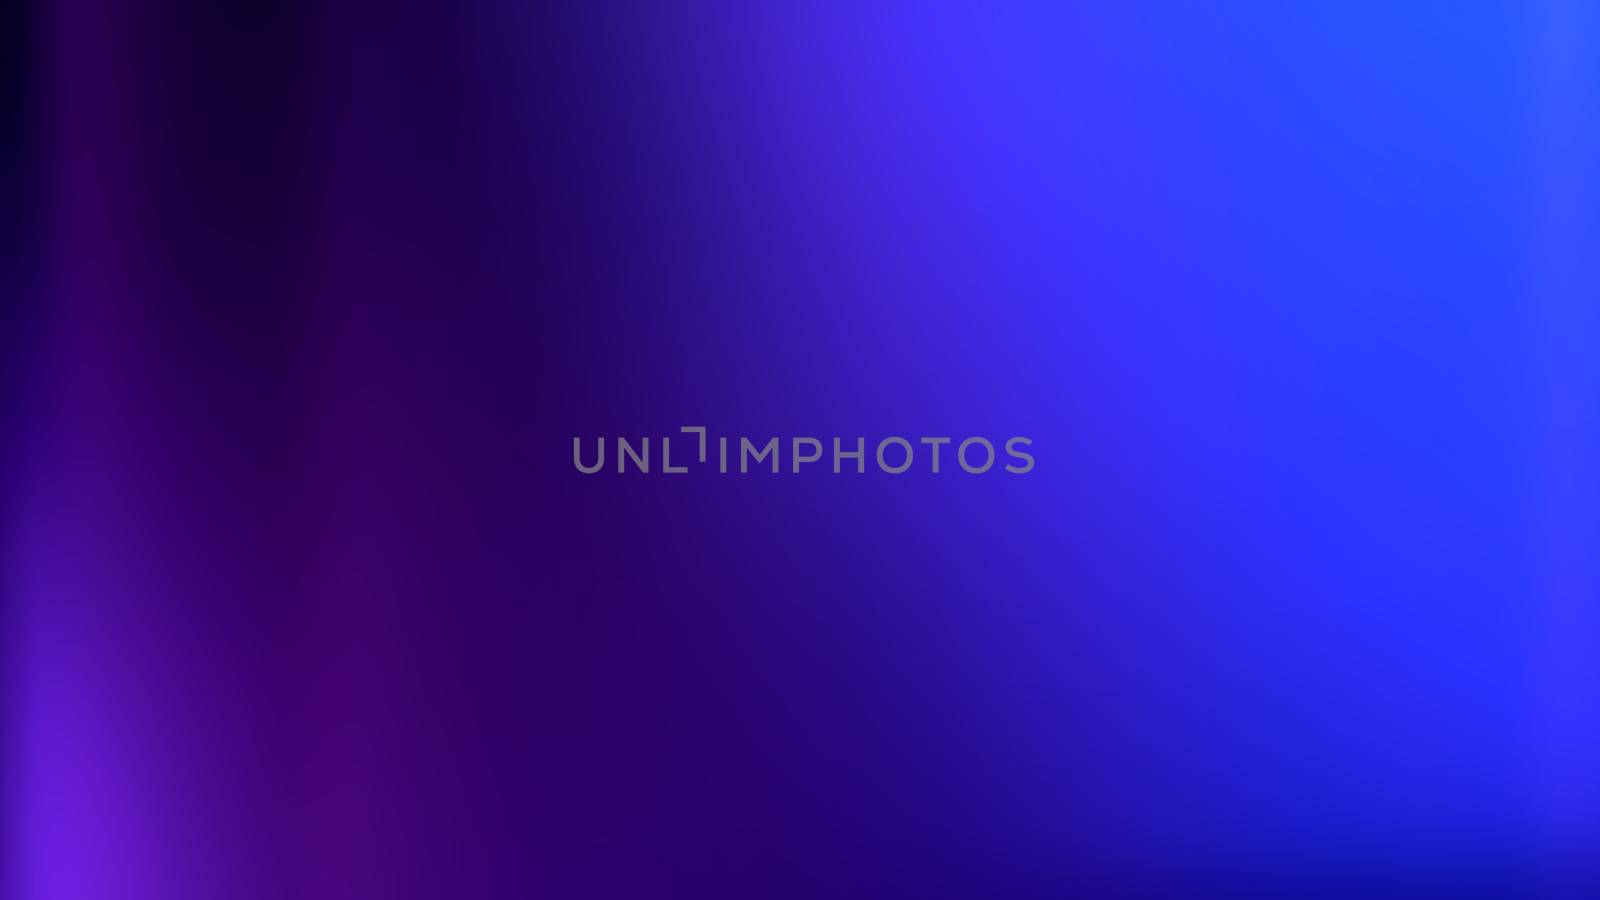 Neon blue light leaks effect background. Real shot in 4k. by dmitrimaruta